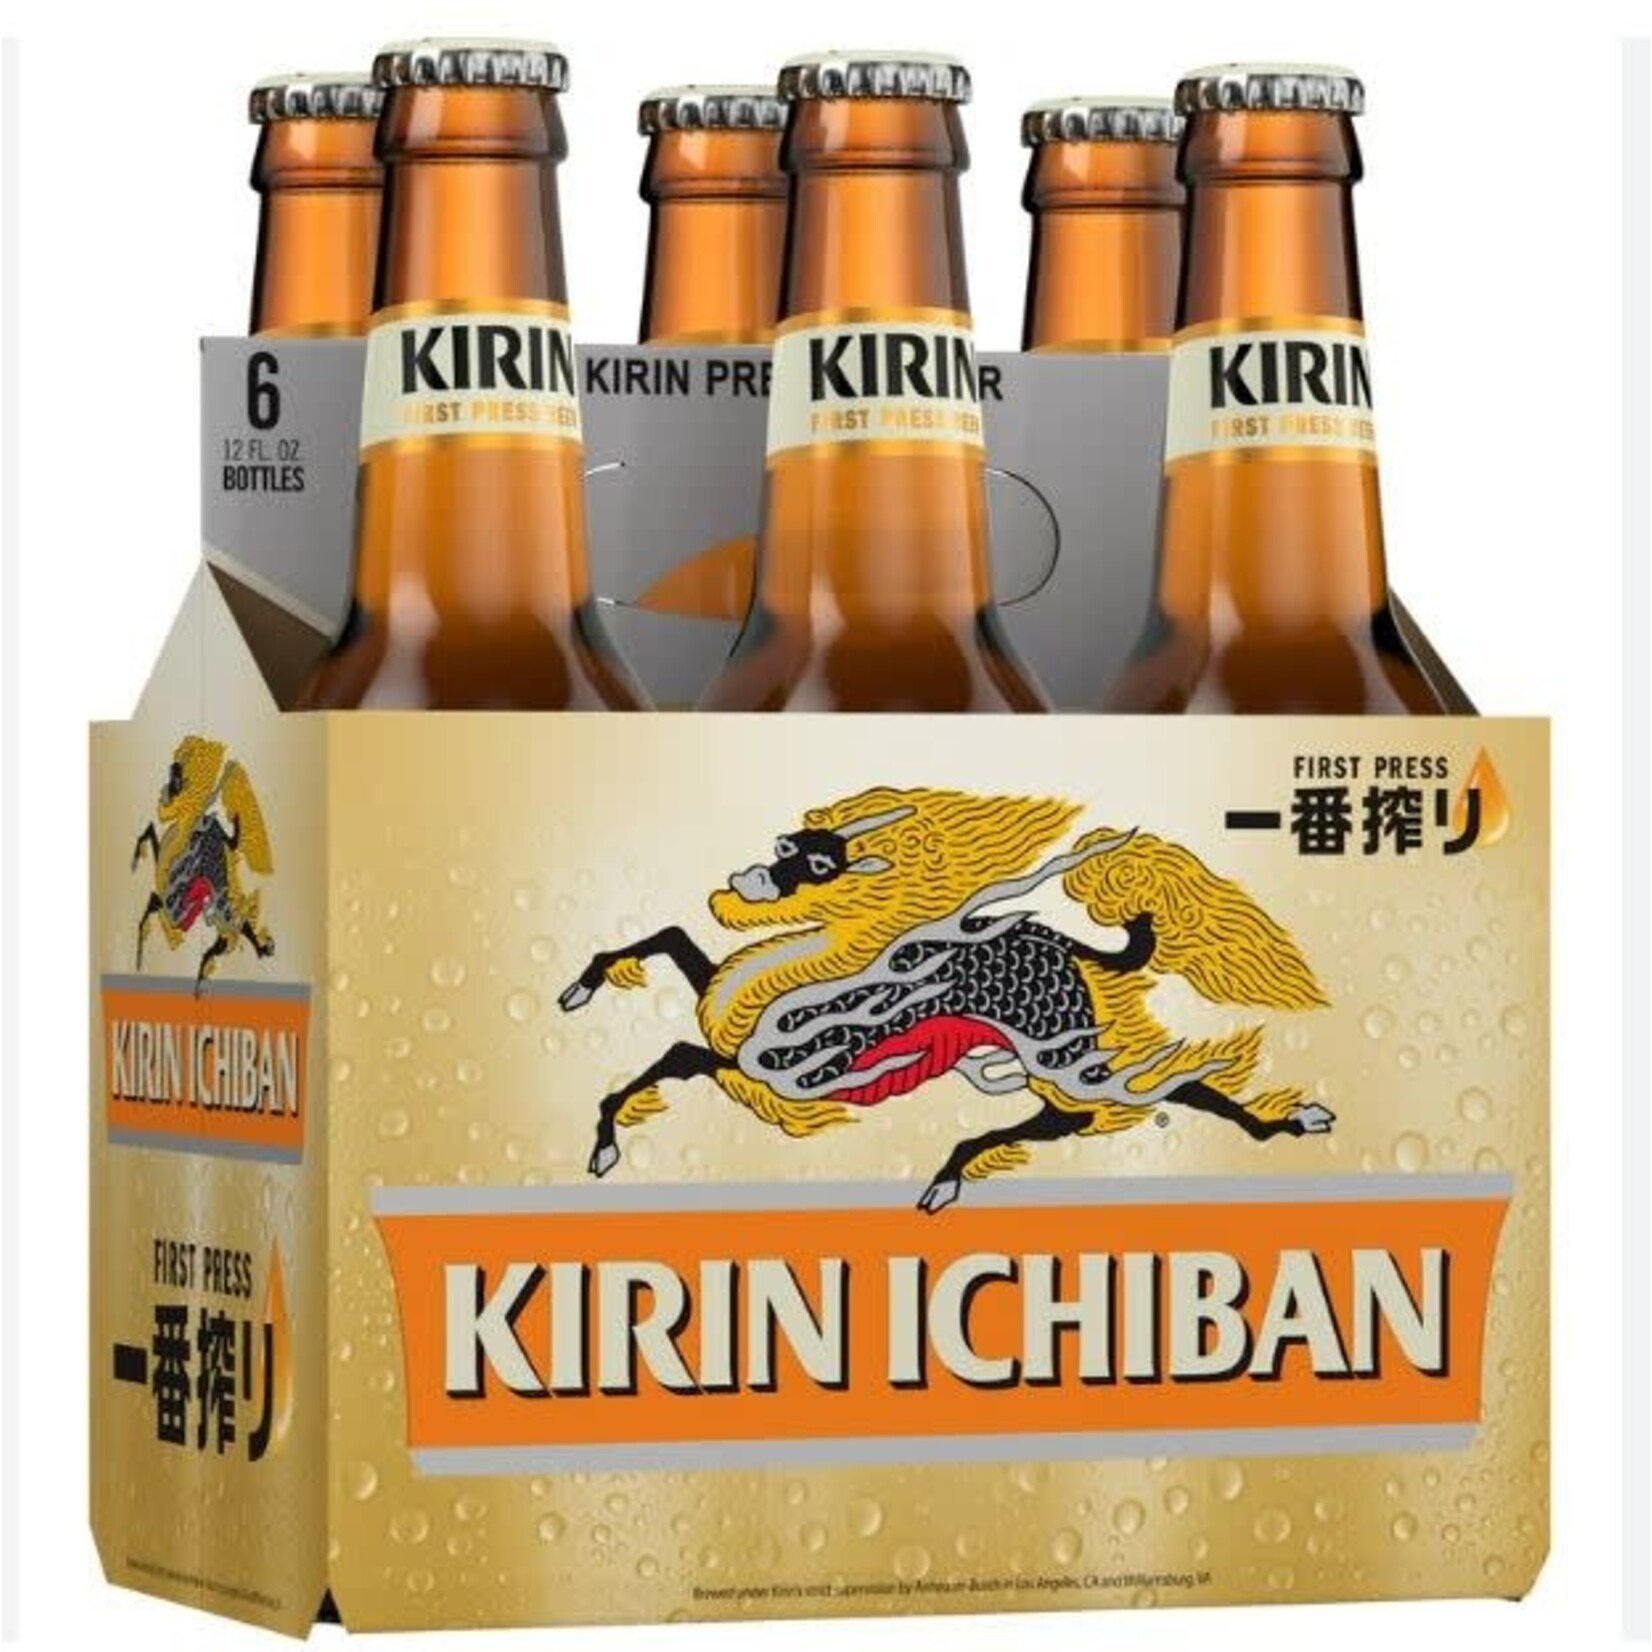 First Press Kirin Ichiban Kirin Premium Beer 6 Bottle Pack